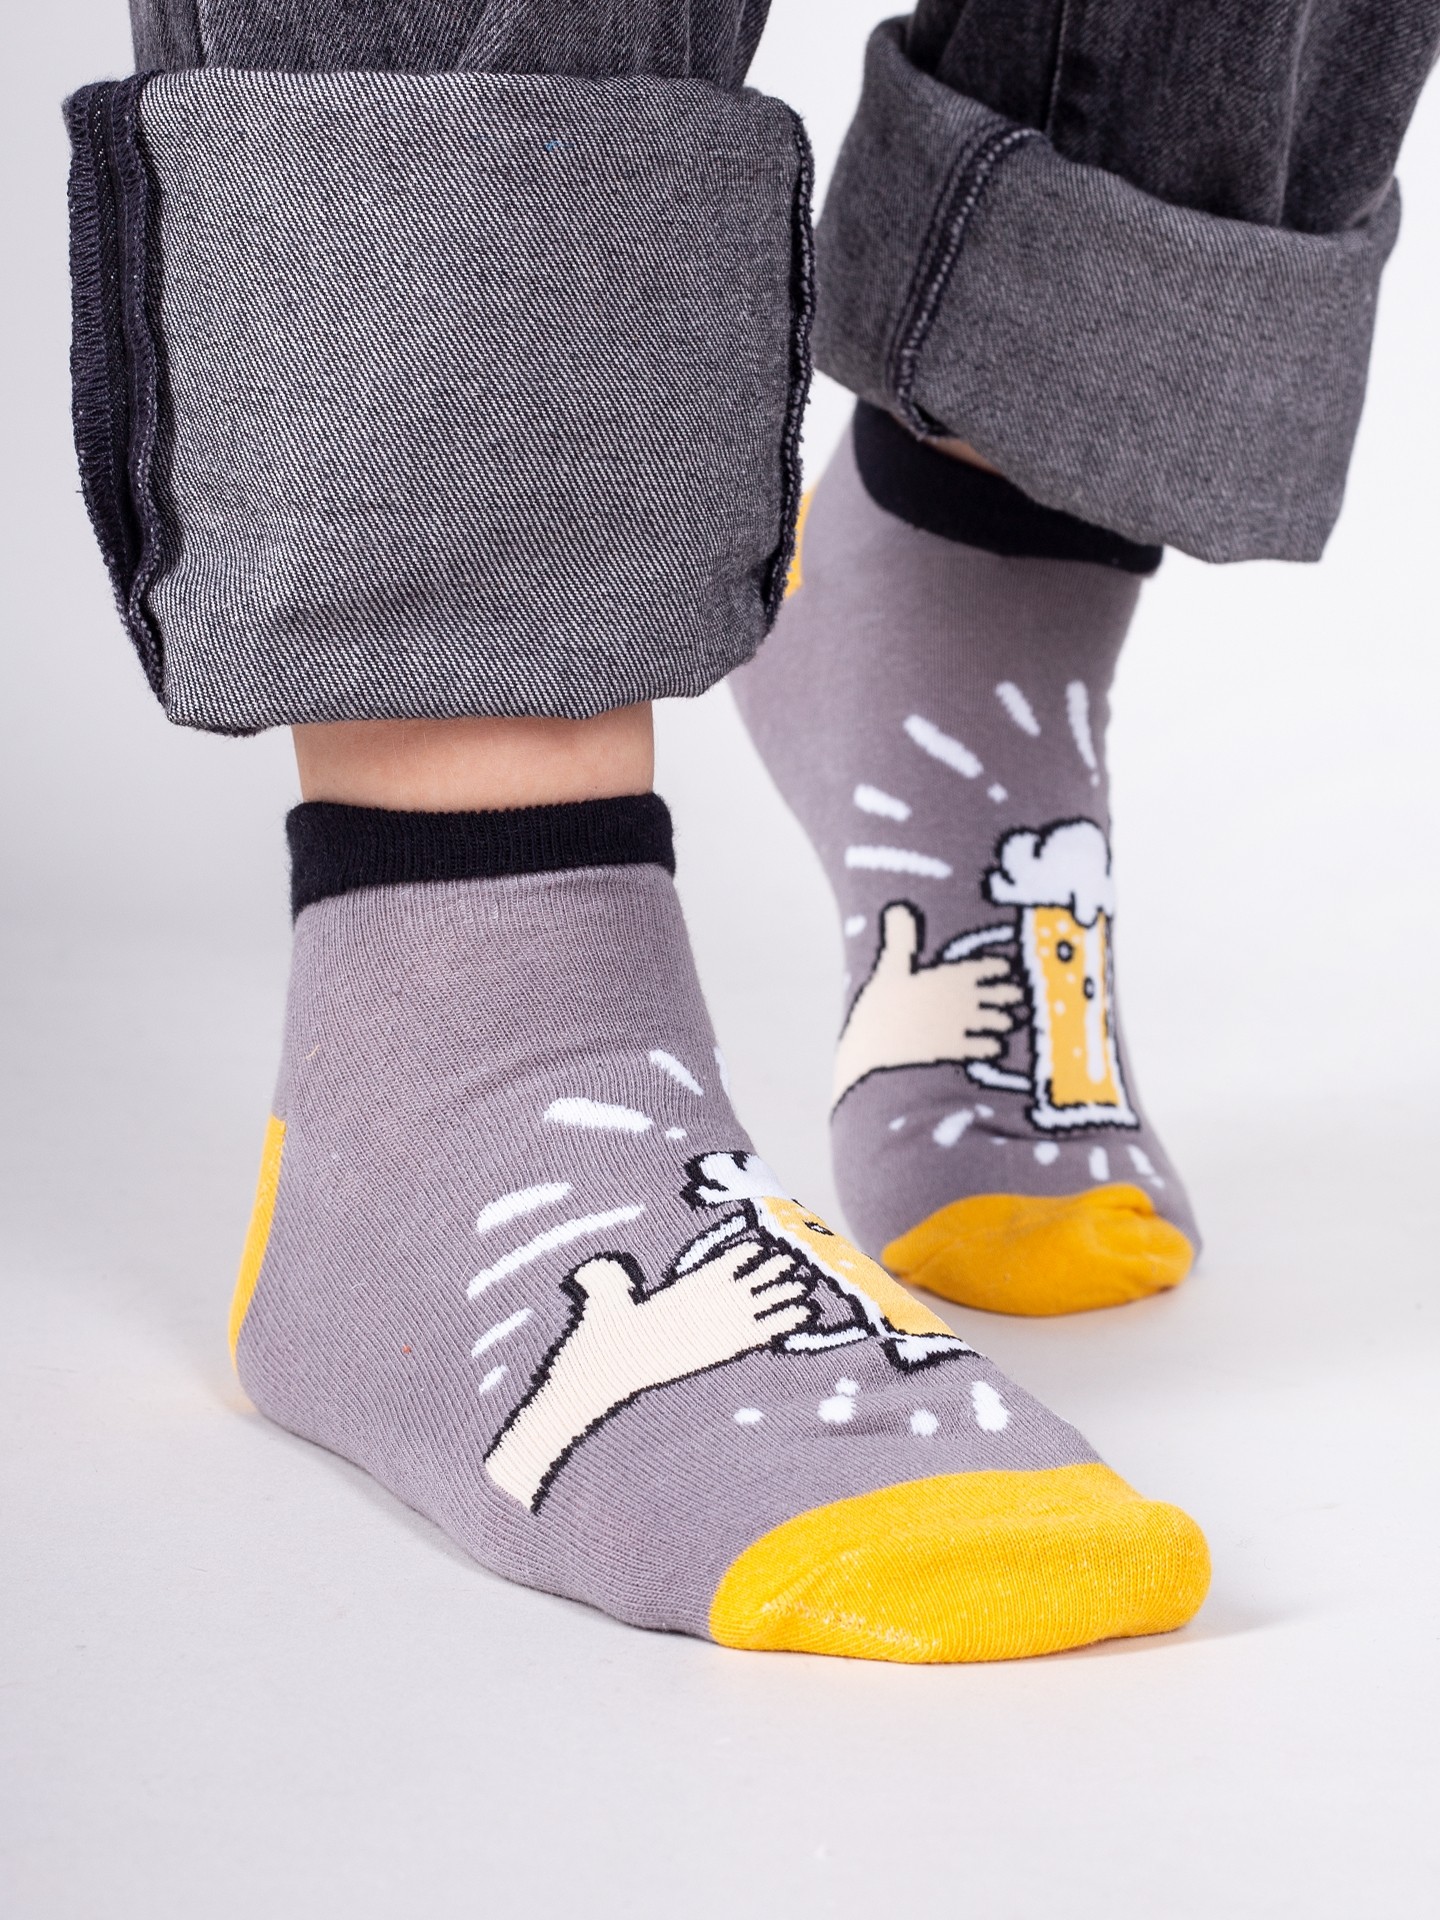 Yoclub Man's Cotton Socks Patterns Colors SKS-0086F-B900